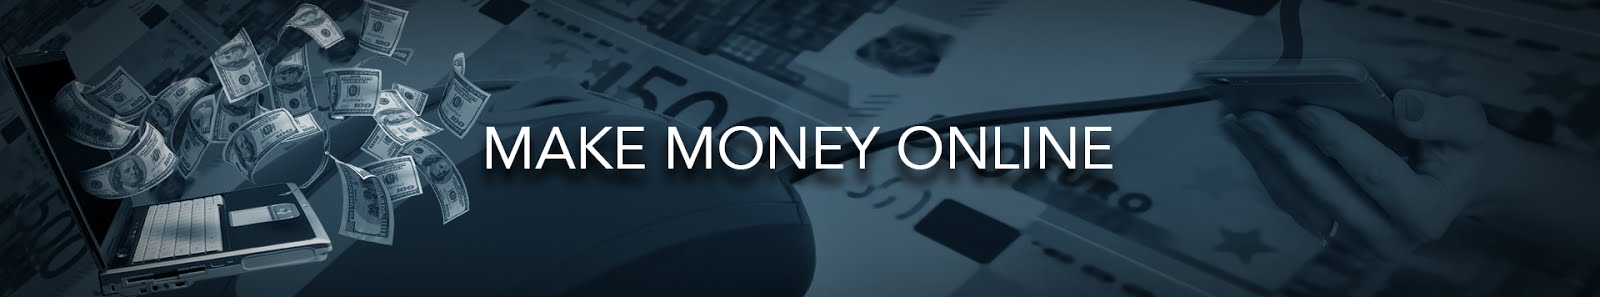 Make Money Online, Earn Money Online, Online Jobs